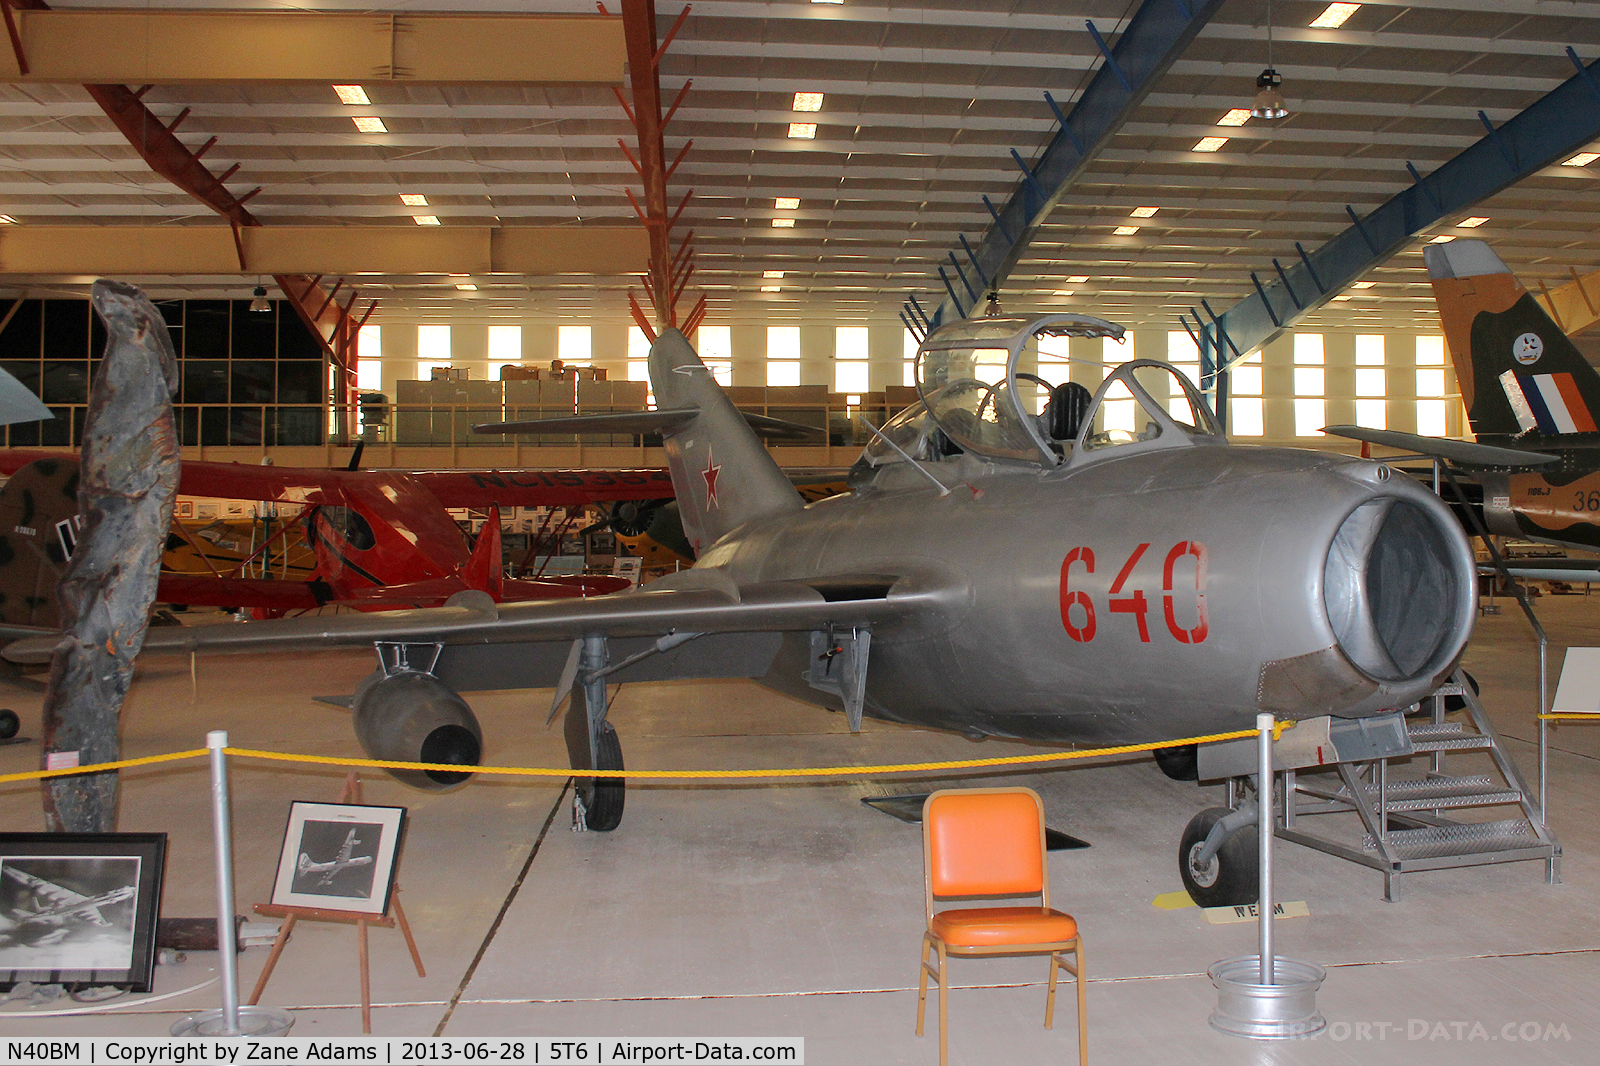 N40BM, 1953 Mikoyan-Gurevich MIG 15 C/N 1A06040, At the War Eagles Museum - Santa Teresa, NM